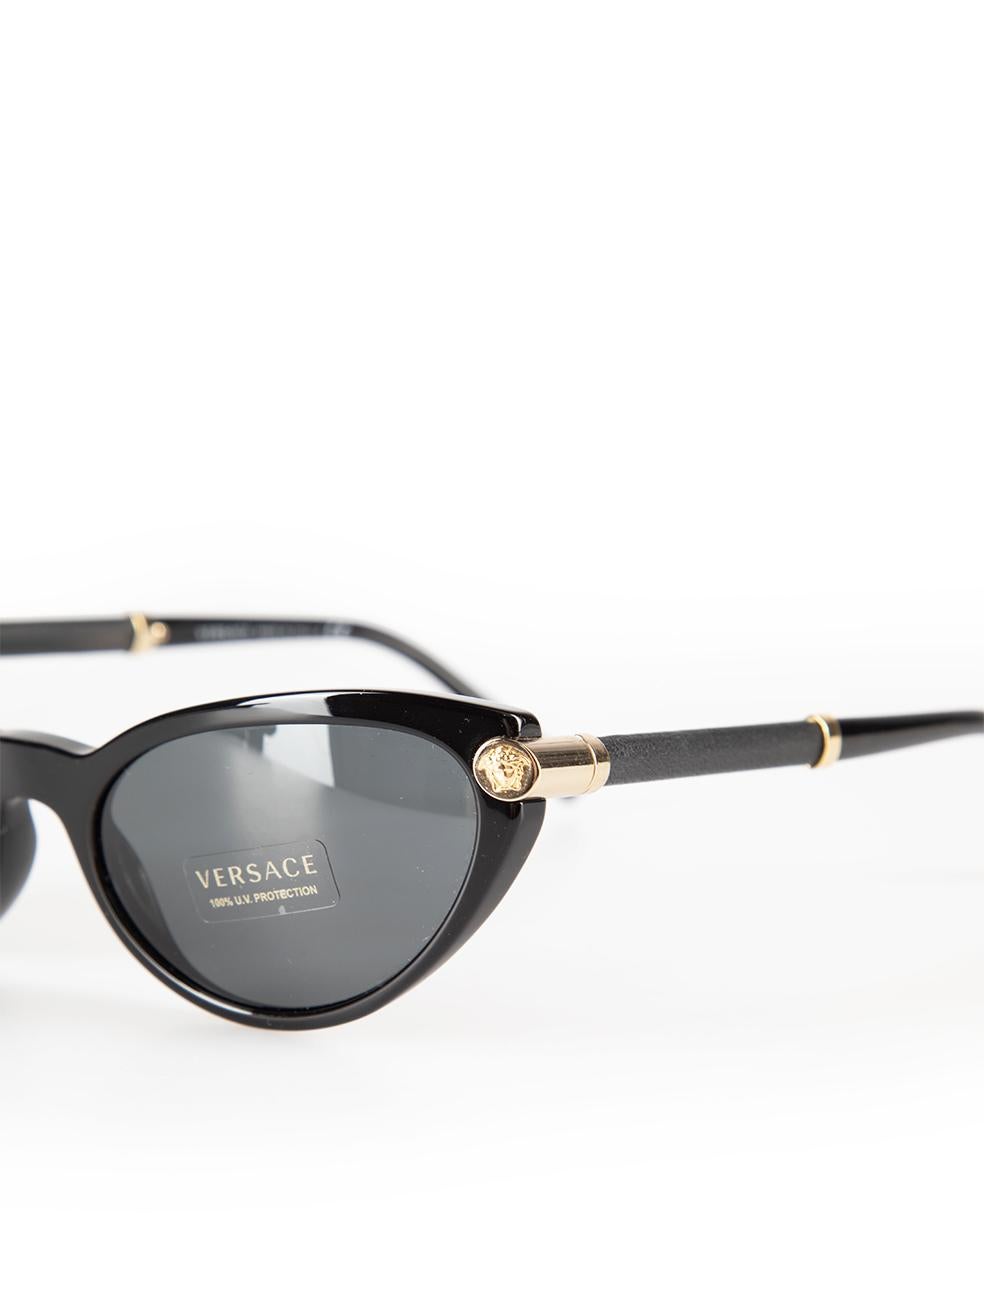 Versace Black Cat Eye Logo Detail Sunglasses For Sale 2